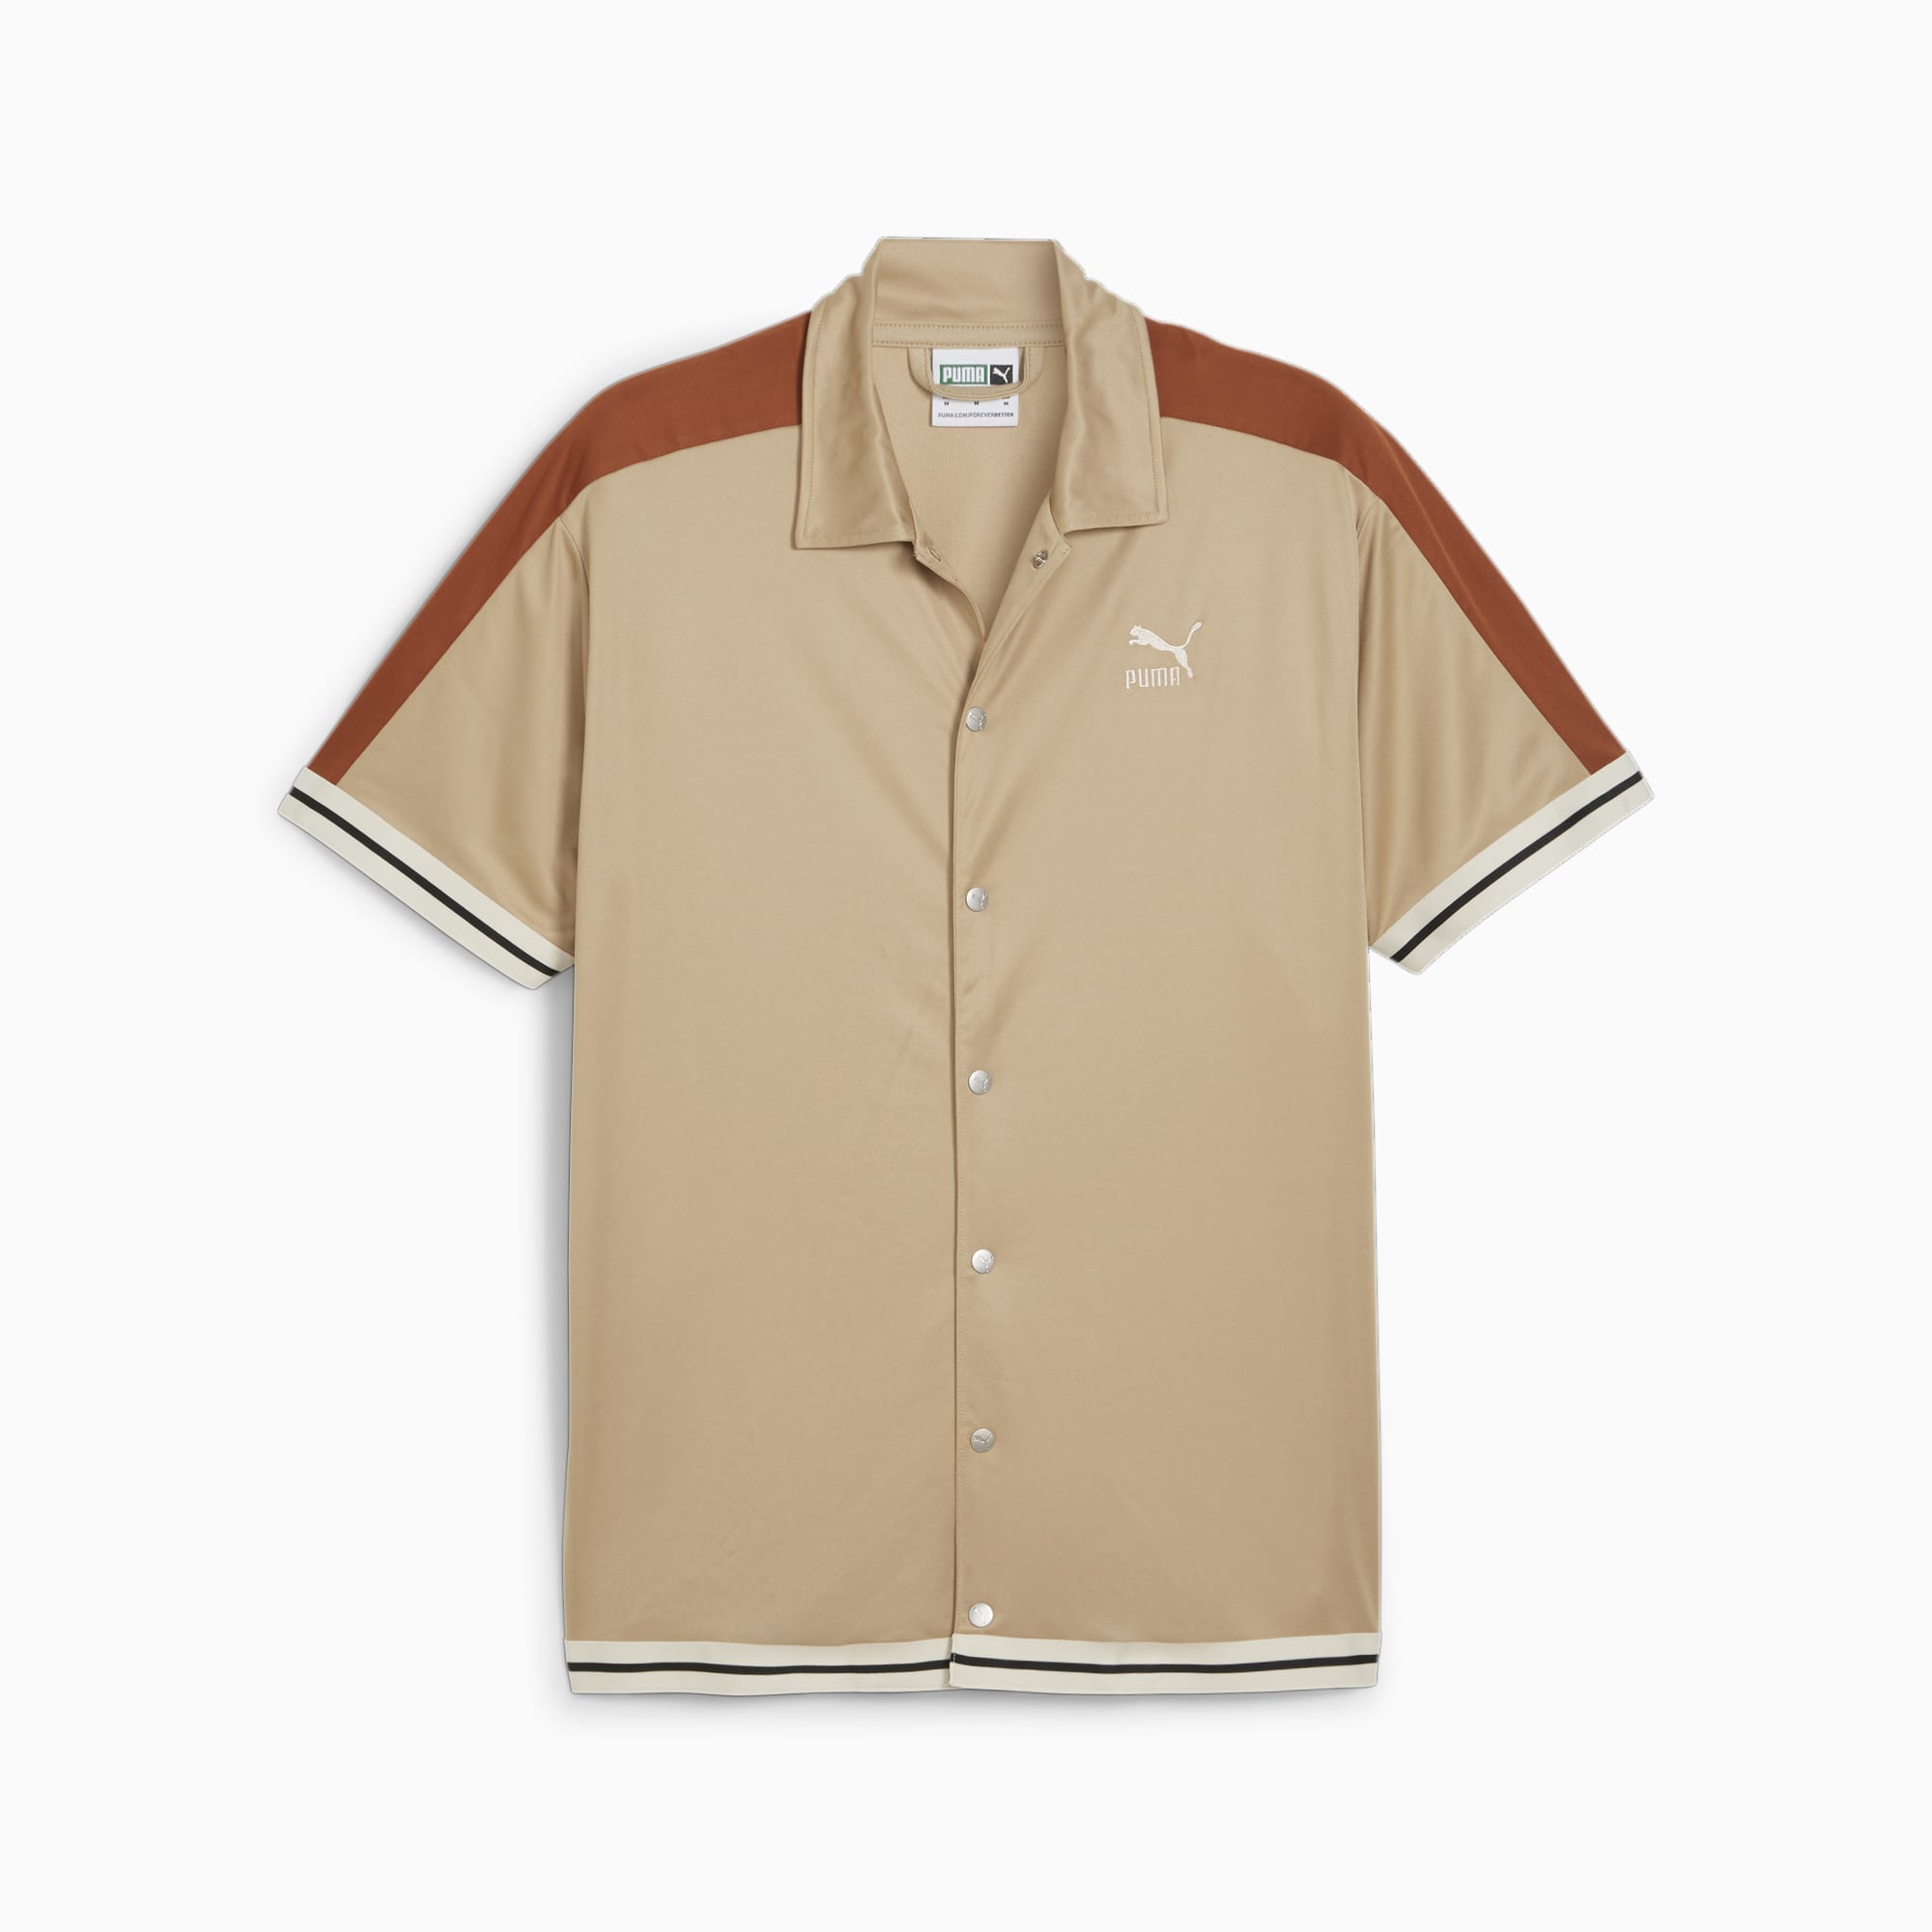 PUMA T7 Men's Shooting Shirt, Prairie Tan, Size S, Clothing